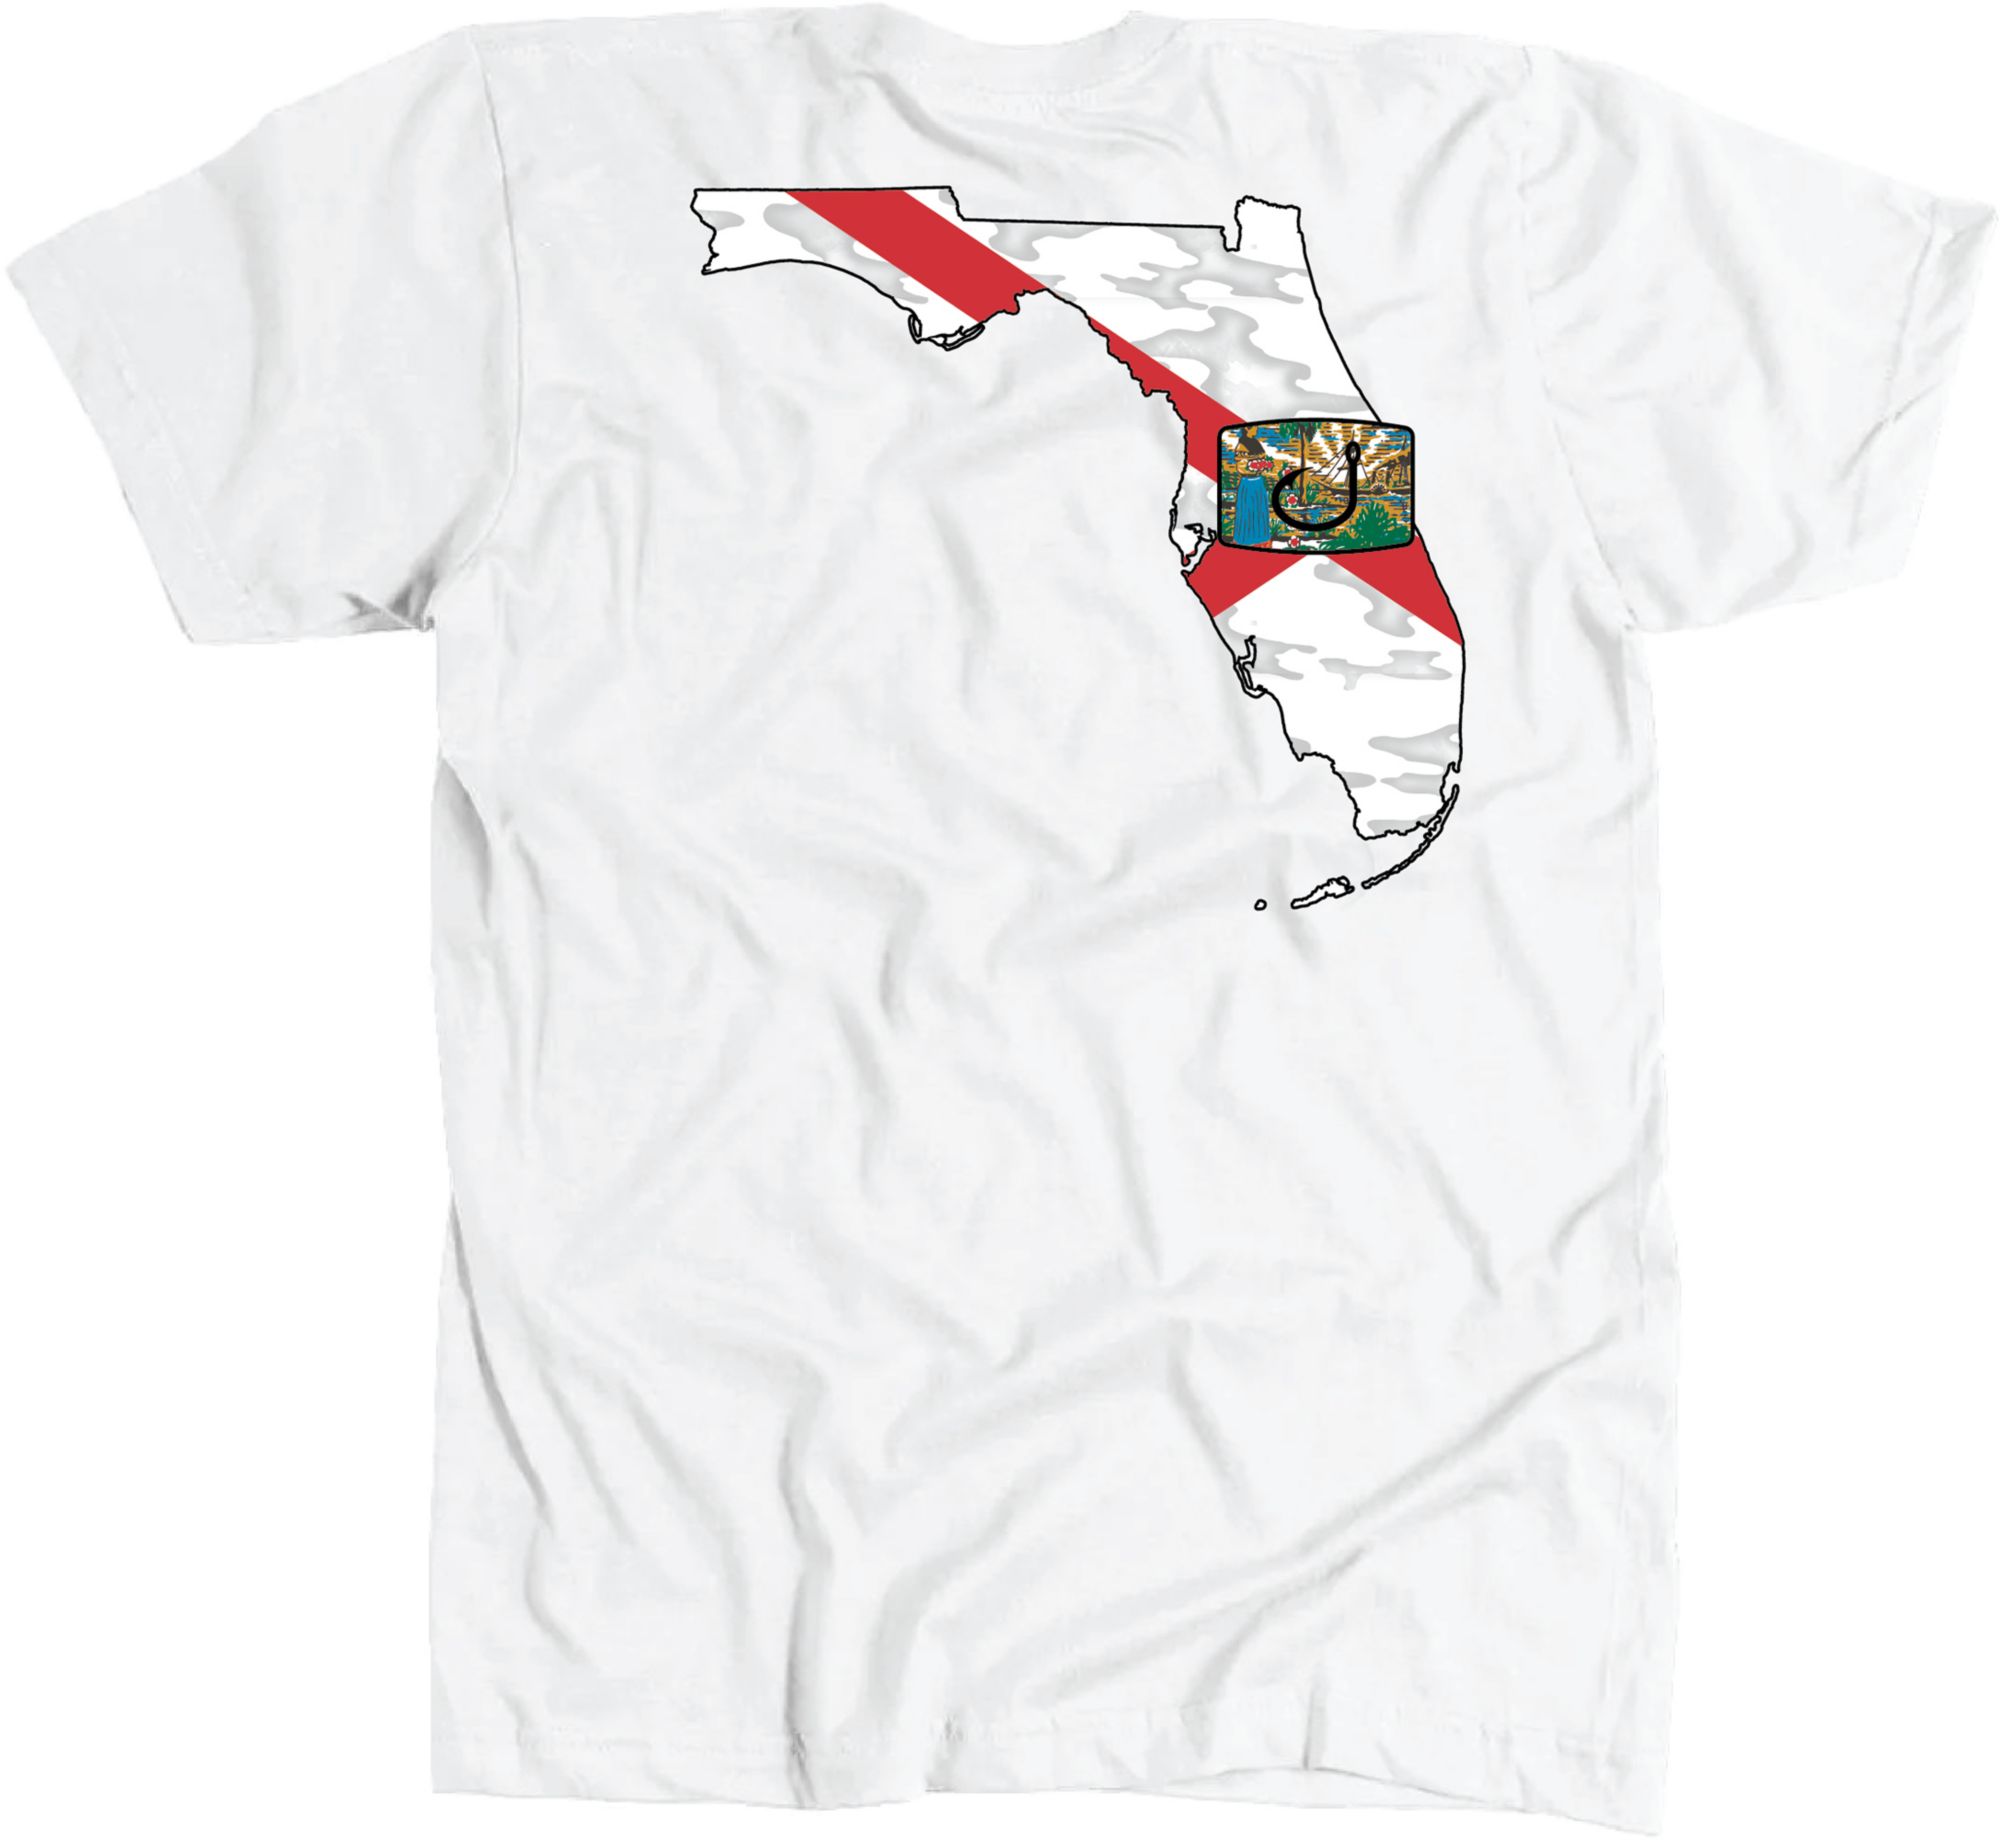 Avid Men's Florida Native T-Shirt